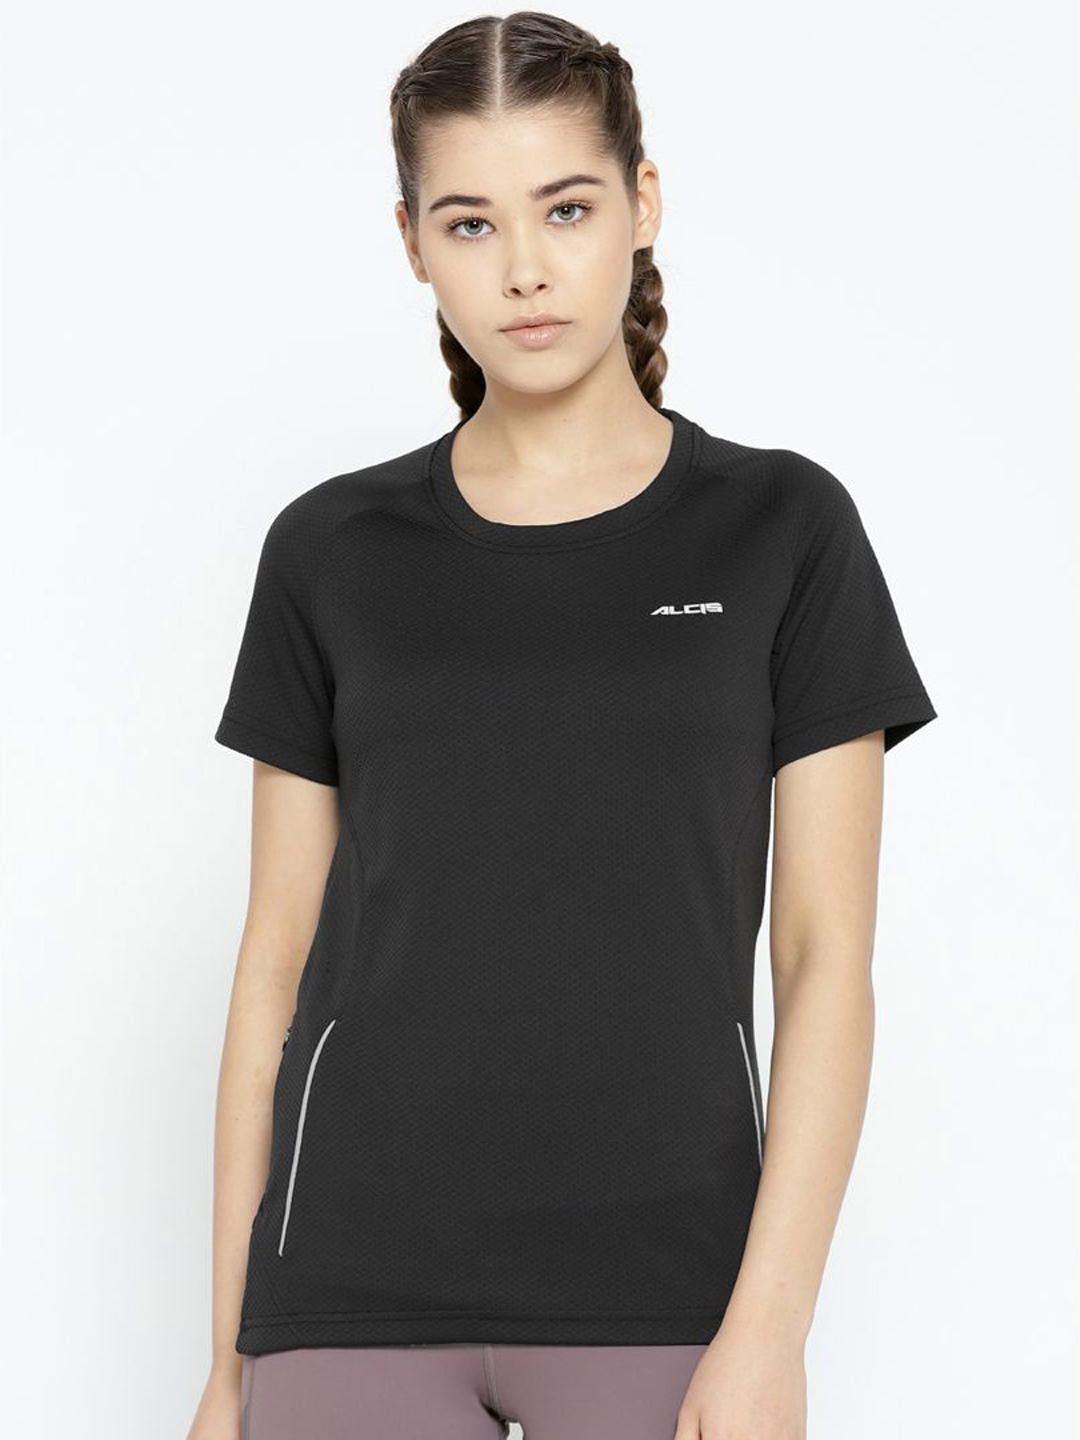 Alcis Women Black Solid Round Neck Running T-shirt